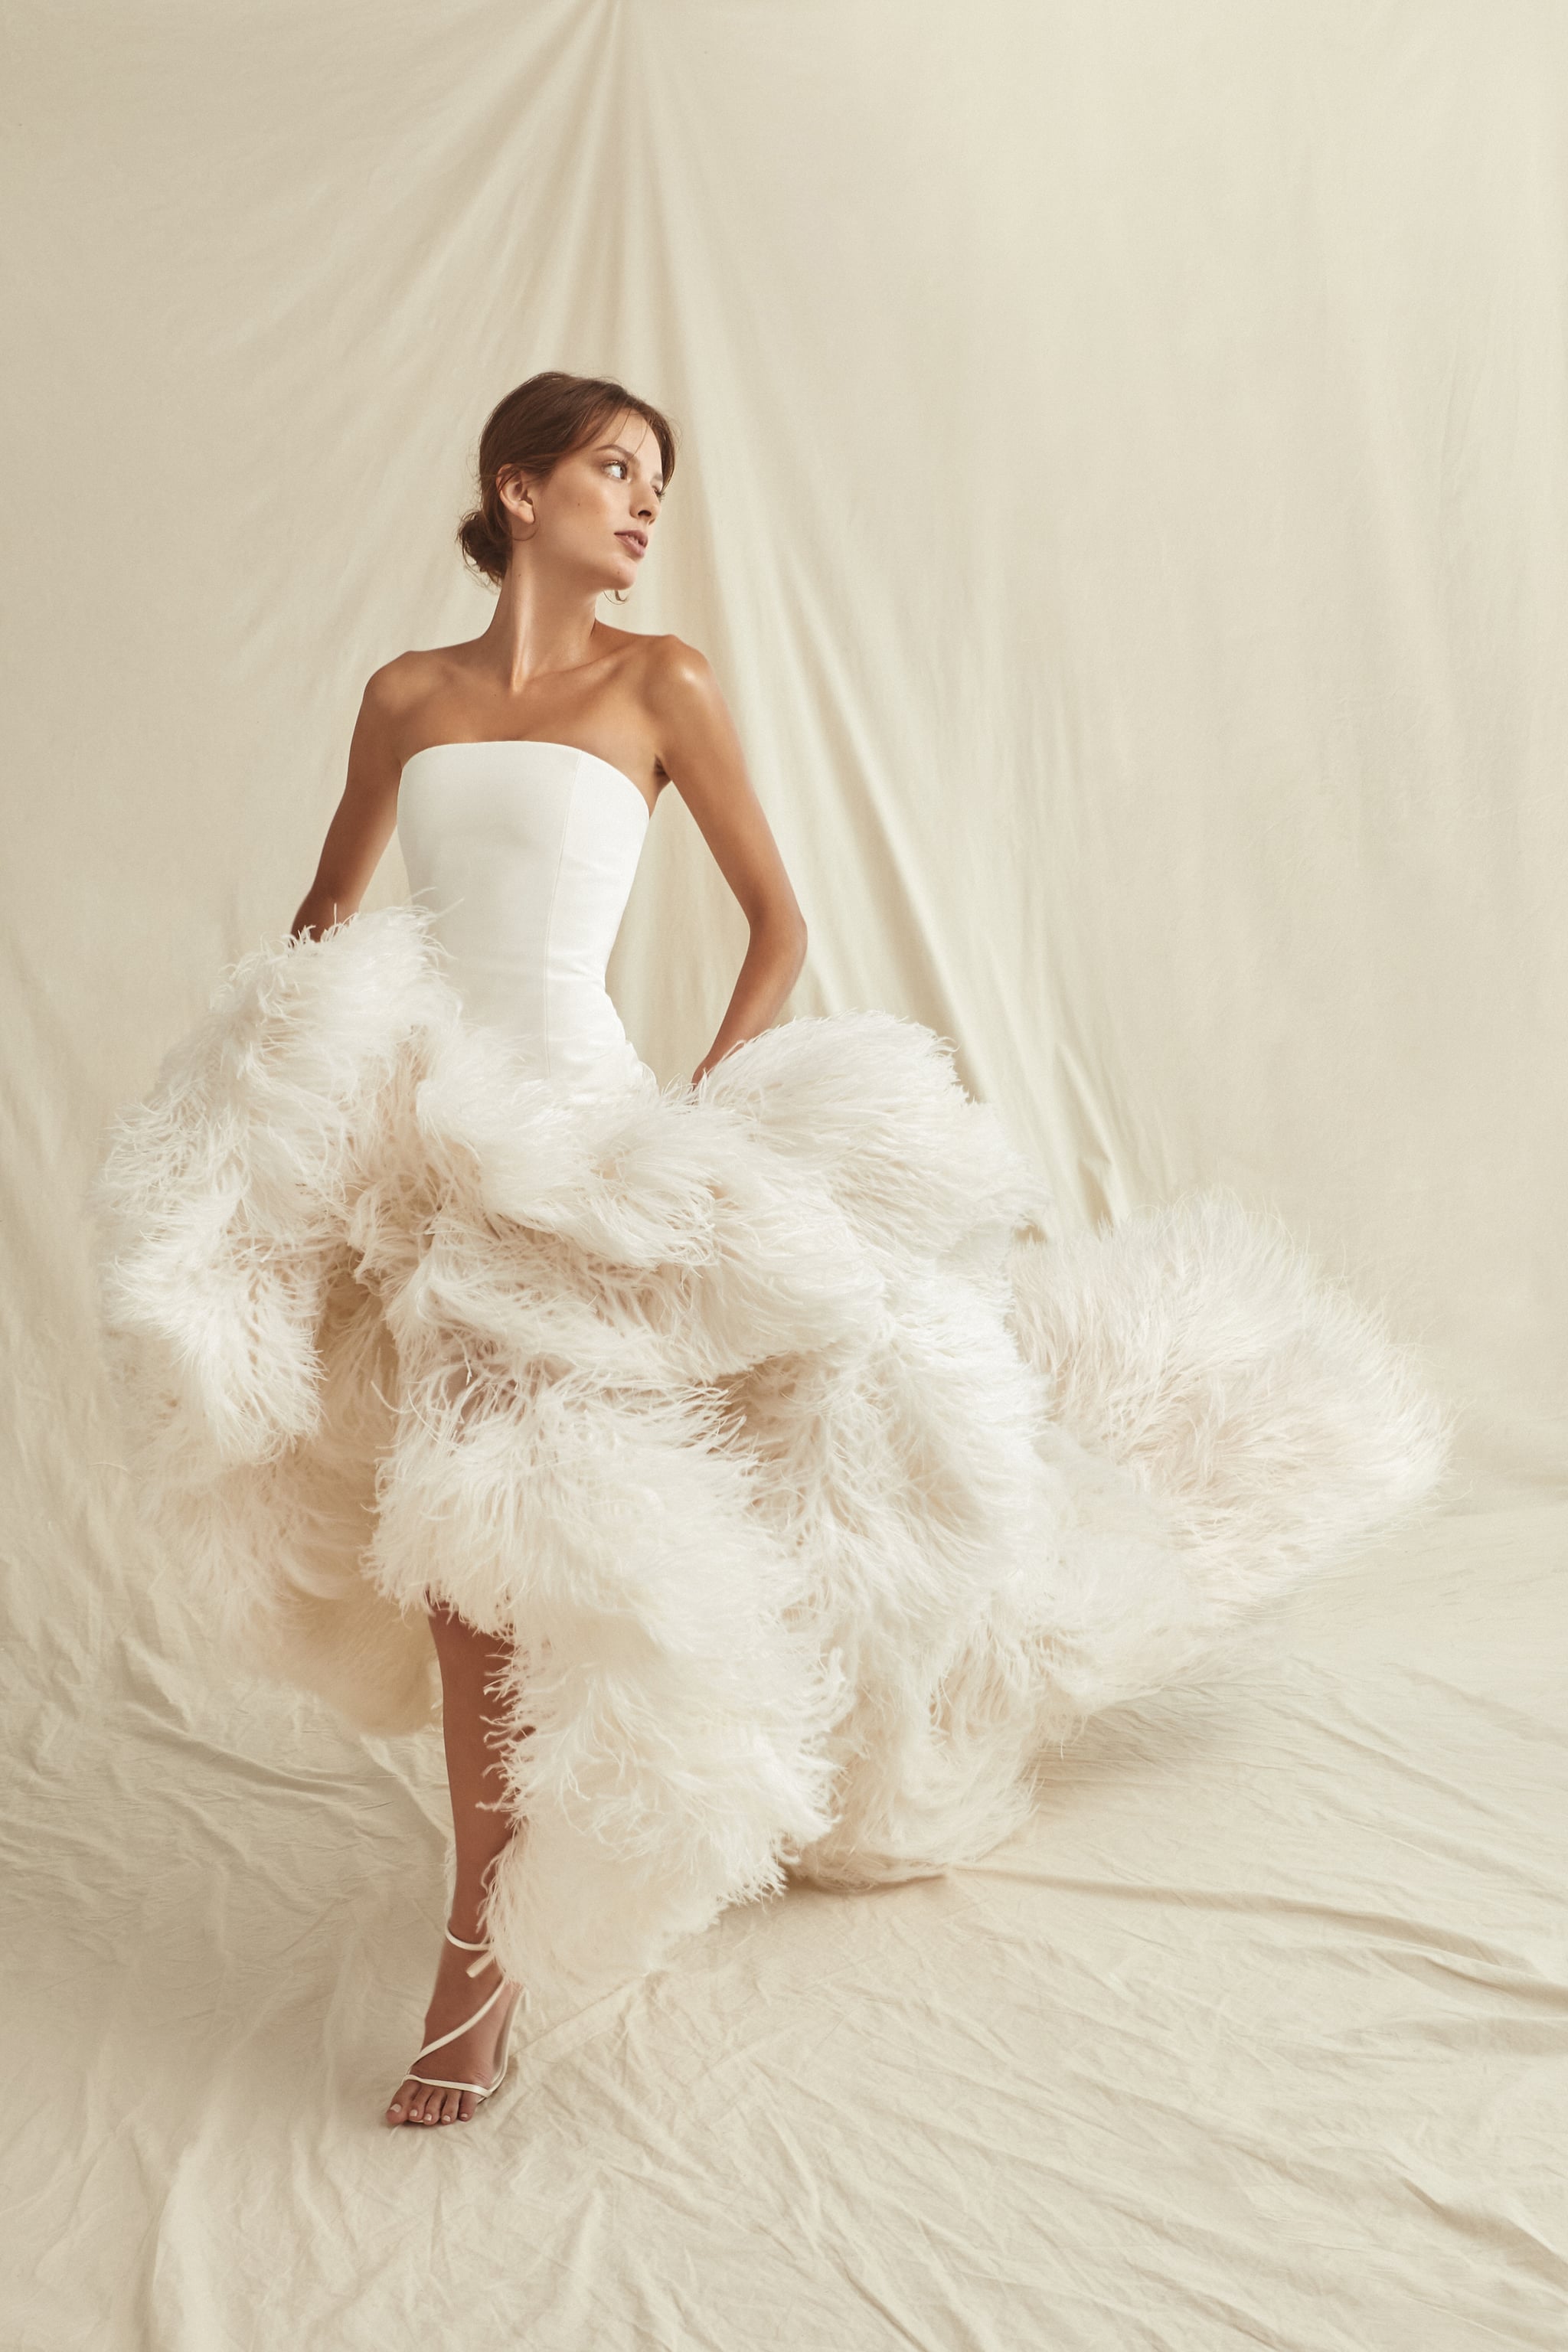 The 6 Biggest Wedding Dress Trends For 21 Brides To Know Popsugar Fashion